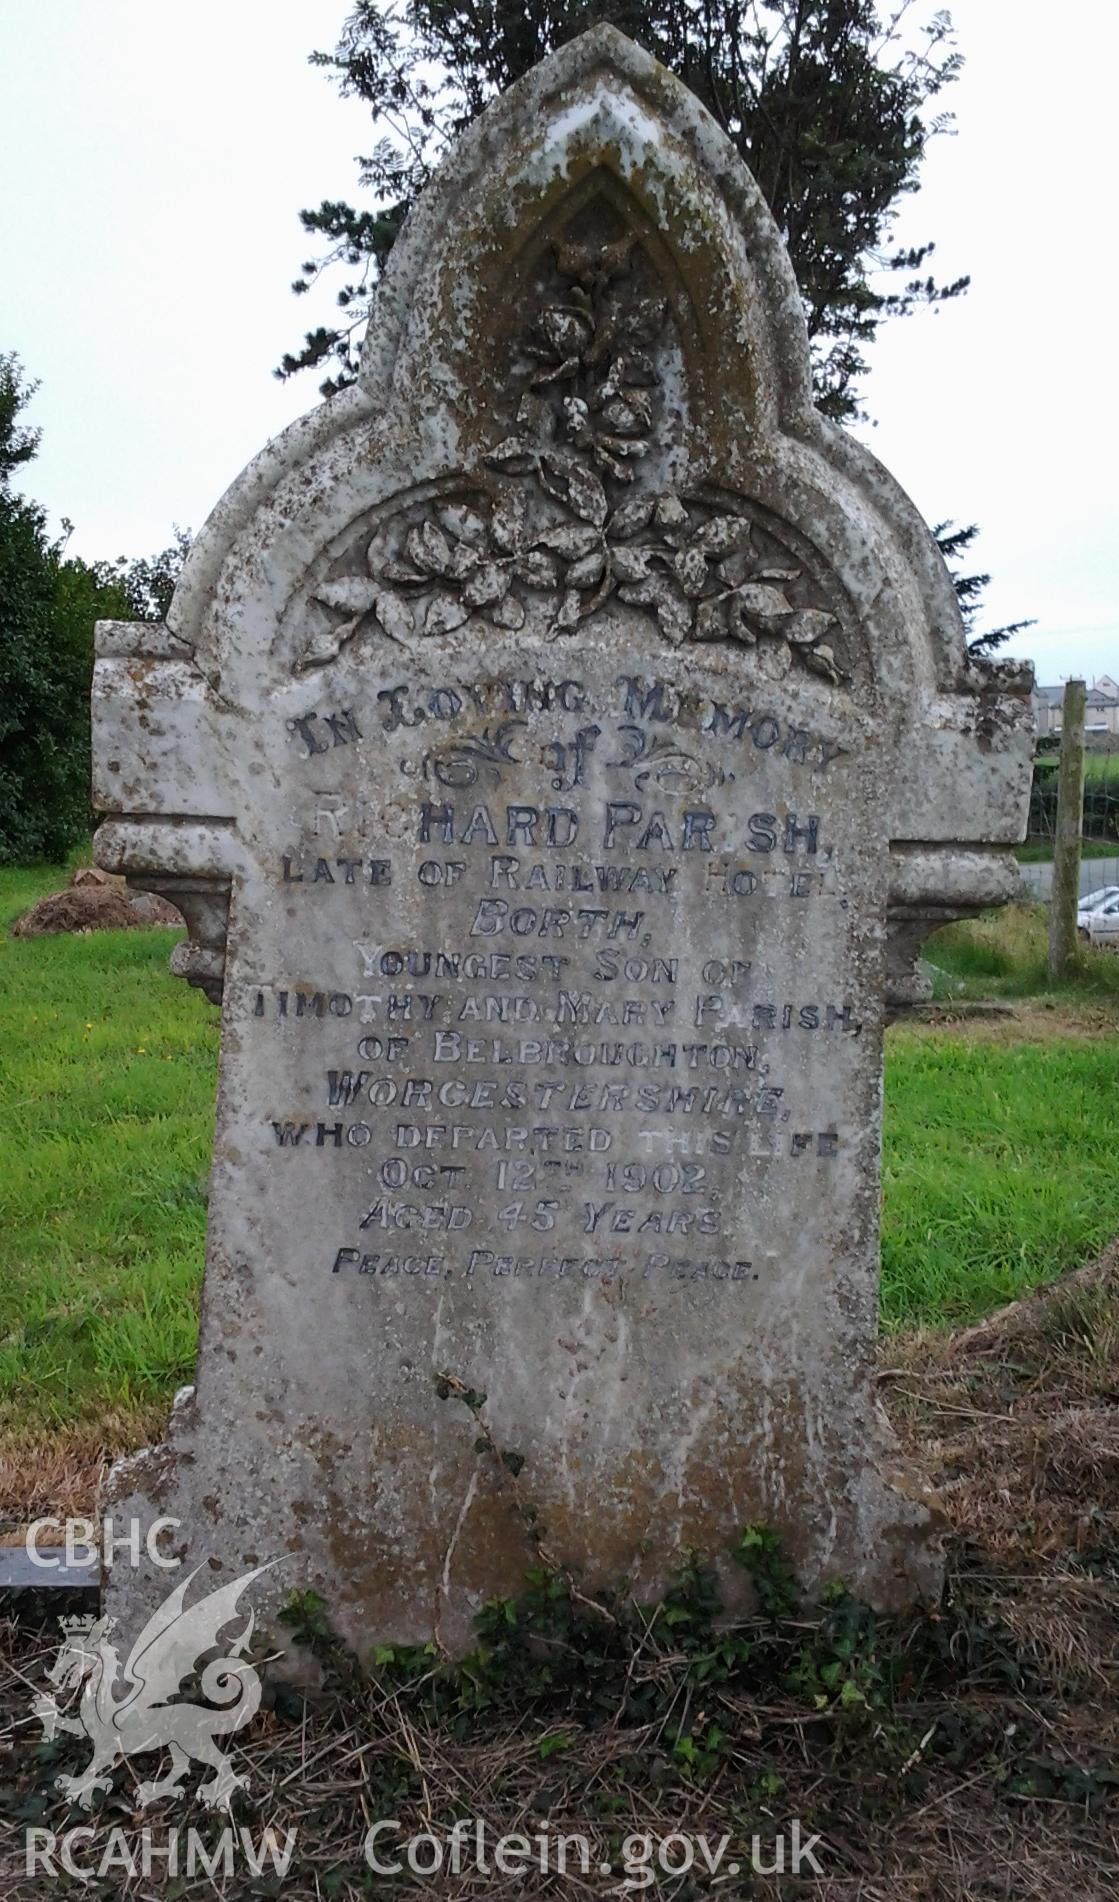 Memorial to Richard Parish of the Railway Hotel, Borth, died October 12 1902